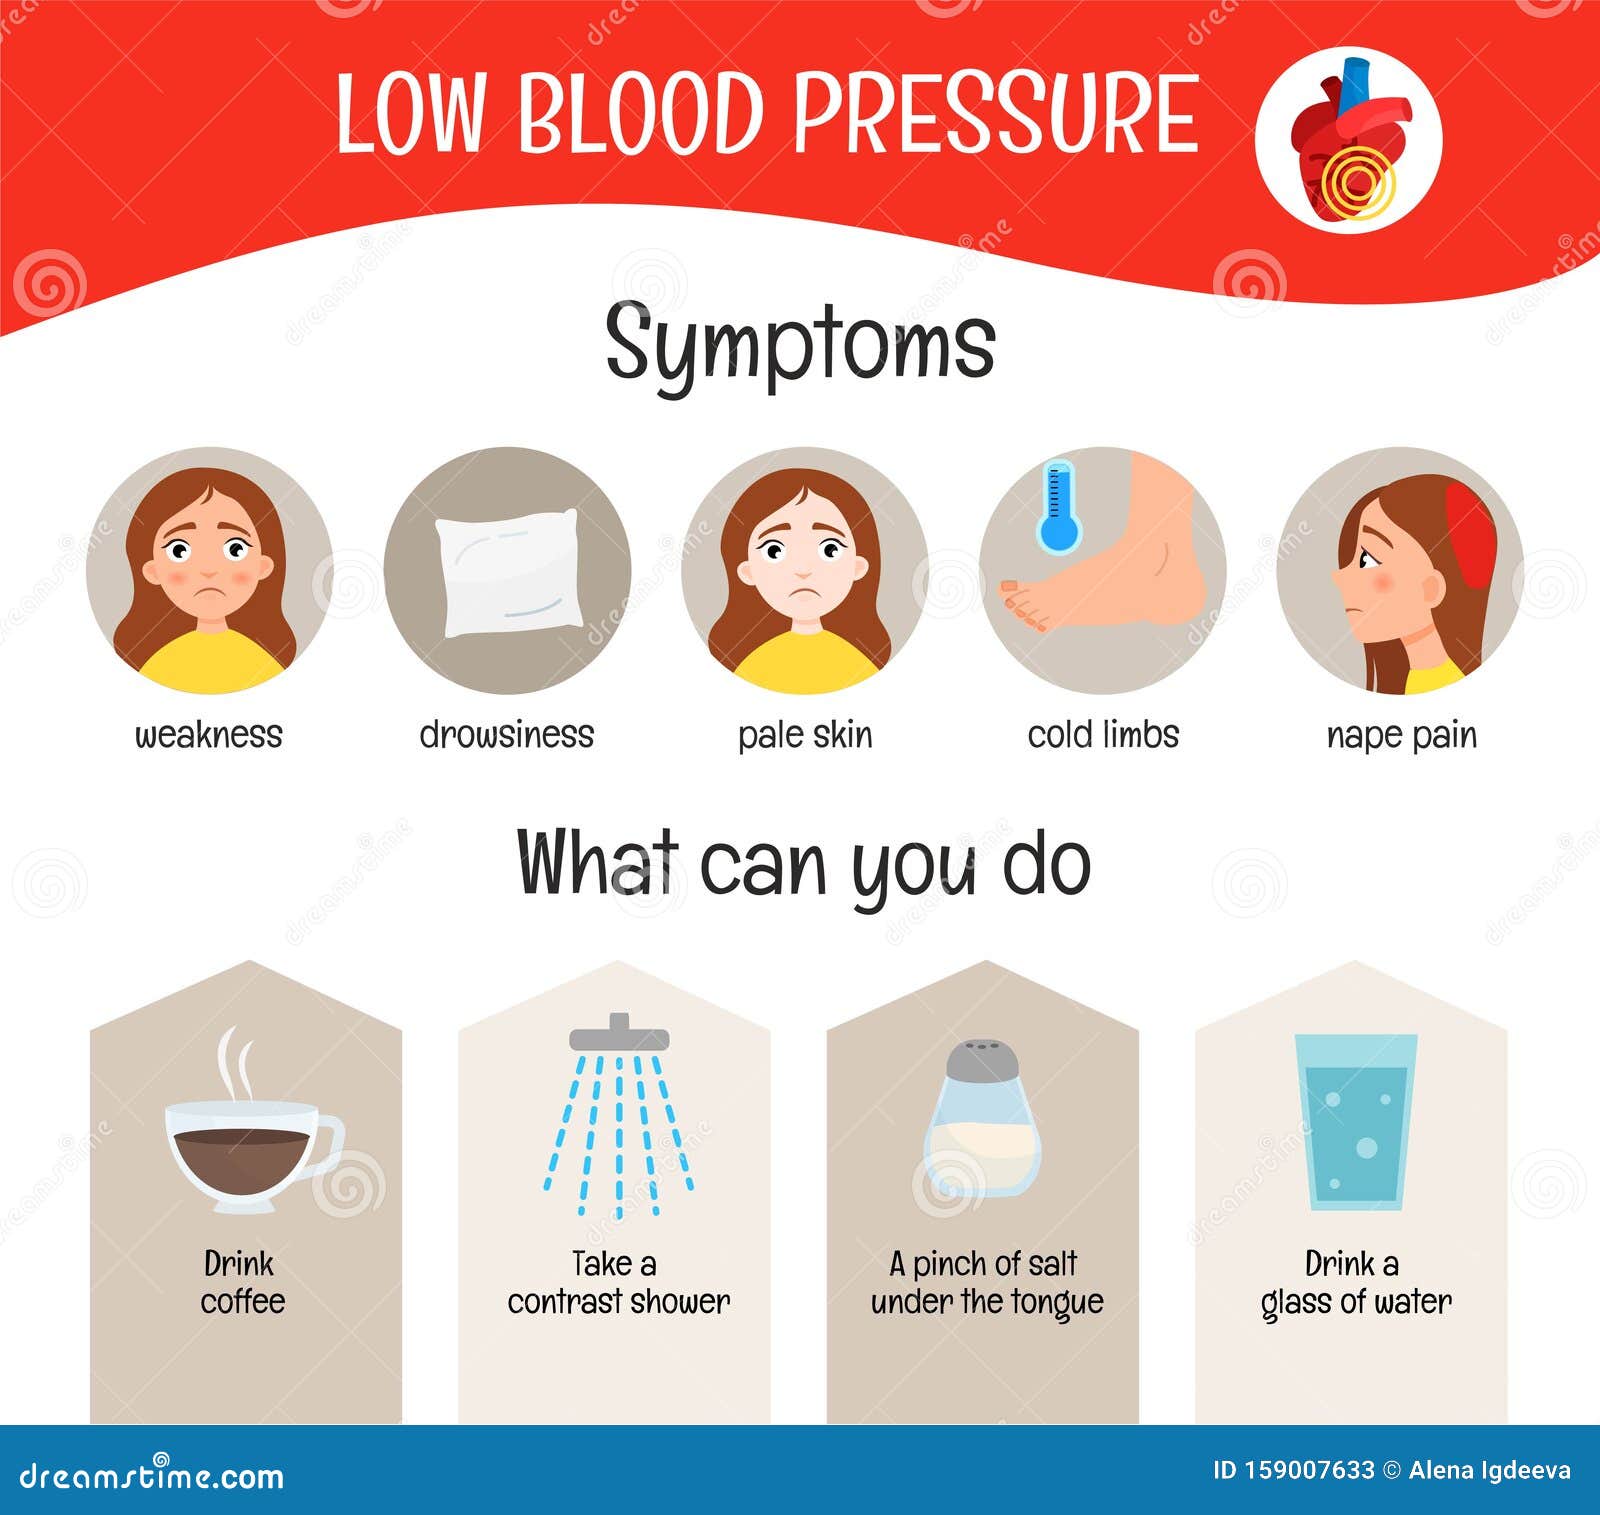 low blood pressure symptoms)